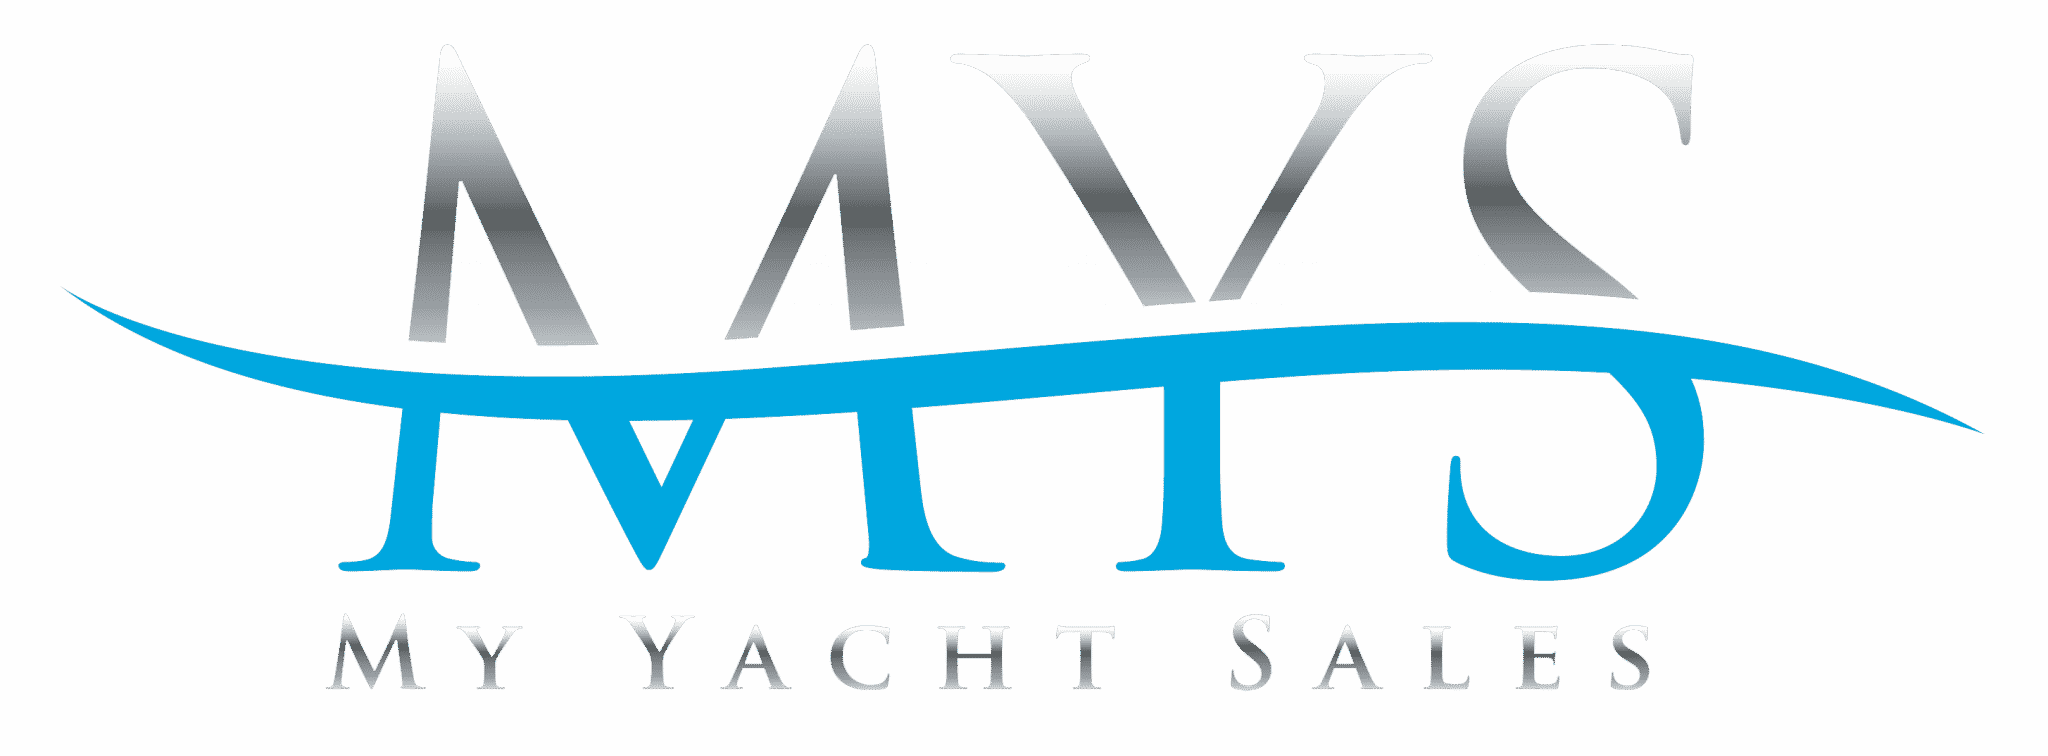 32-ft-Boston Whaler-2020-Vantage-Miami Florida United States   yacht for sale